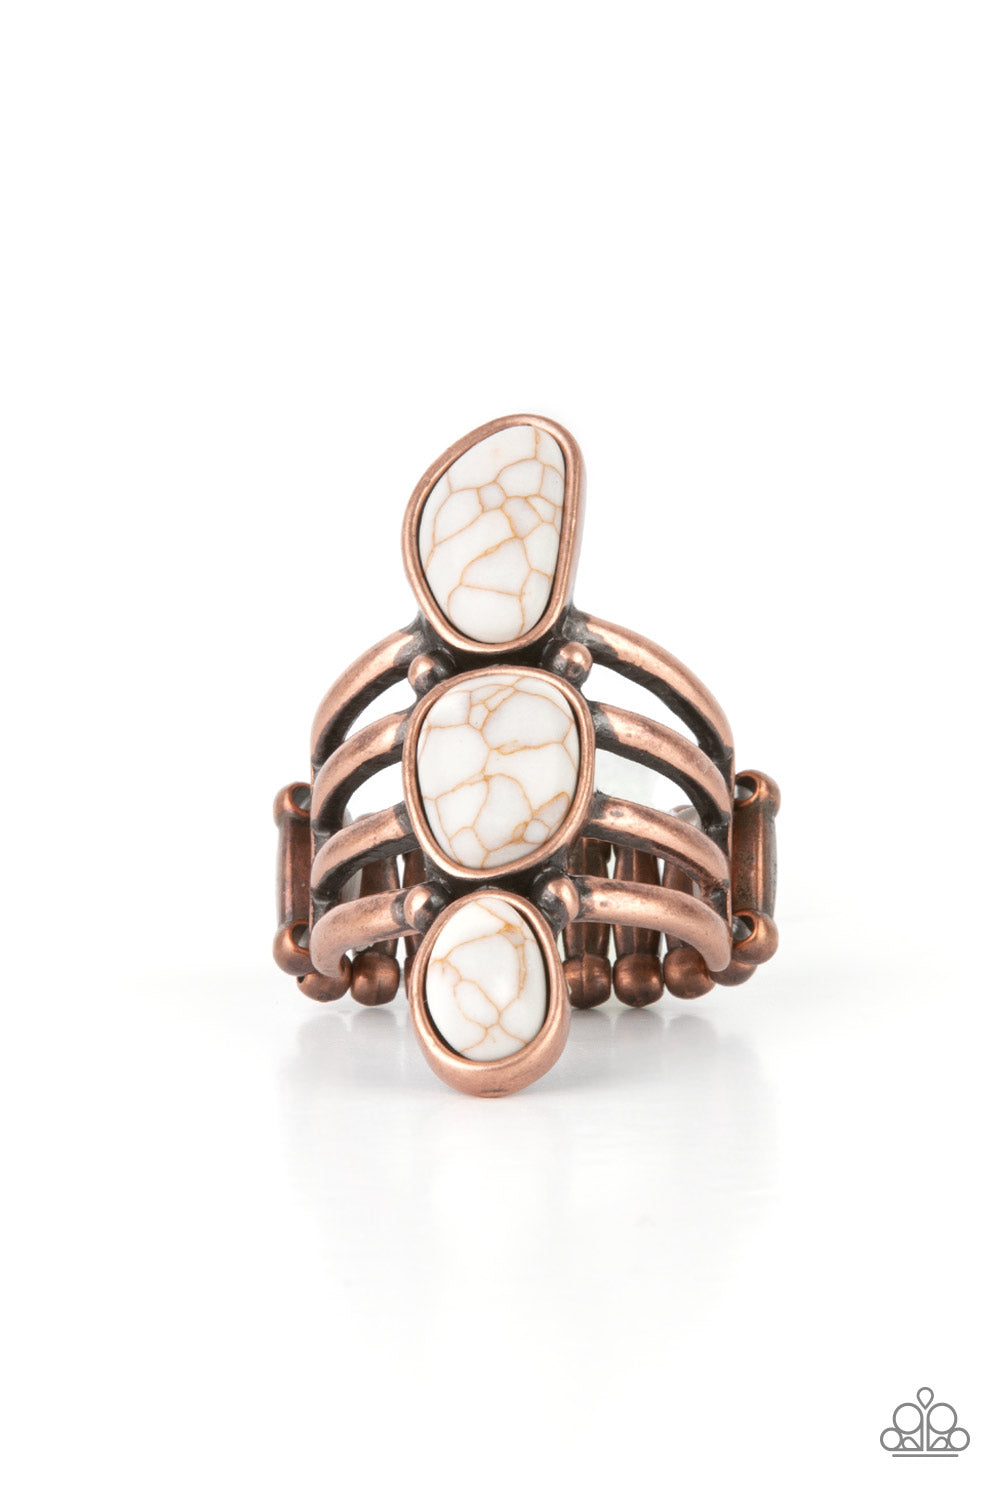 Extra Eco - Copper & White Stone Ring - Princess Glam Shop